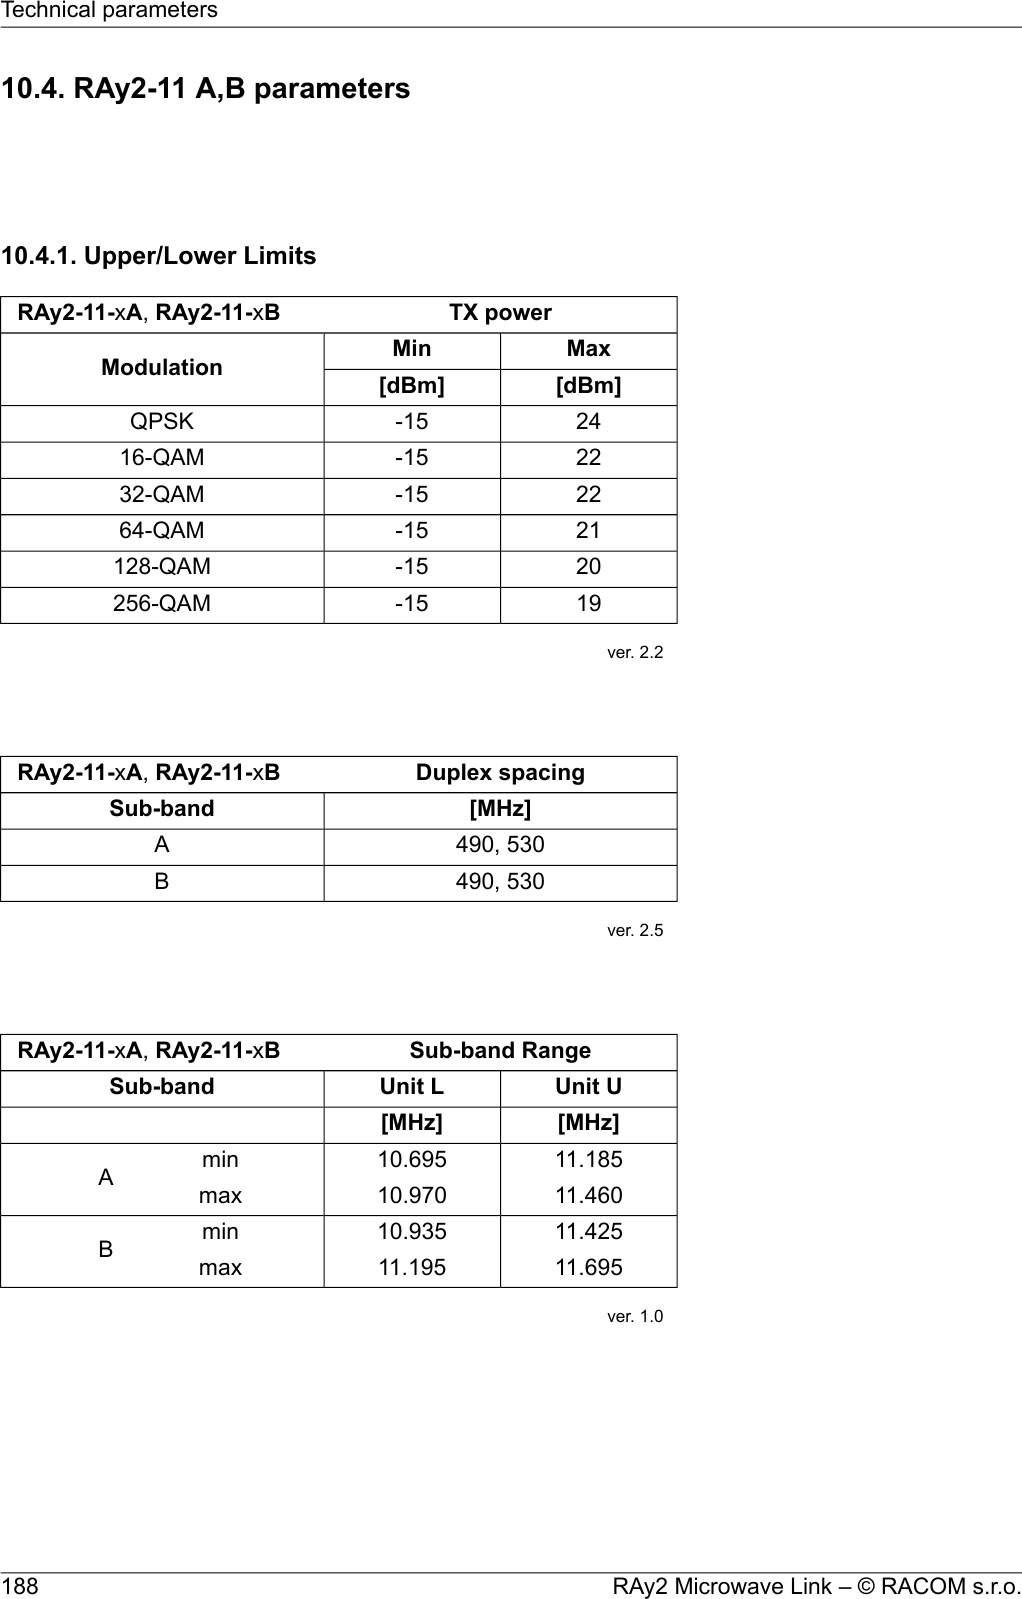 10.4. RAy2-11 A,B parameters10.4.1. Upper/Lower LimitsTX powerRAy2-11-xA,RAy2-11-xBMaxMinModulation [dBm][dBm]24-15QPSK22-1516-QAM22-1532-QAM21-1564-QAM20-15128-QAM19-15256-QAMver. 2.2Duplex spacingRAy2-11-xA,RAy2-11-xB[MHz]Sub-band490, 530A490, 530Bver. 2.5Sub-band RangeRAy2-11-xA,RAy2-11-xBUnit UUnit LSub-band[MHz][MHz]11.18510.695minA11.46010.970max11.42510.935minB11.69511.195maxver. 1.0RAy2 Microwave Link – © RACOM s.r.o.188Technical parameters